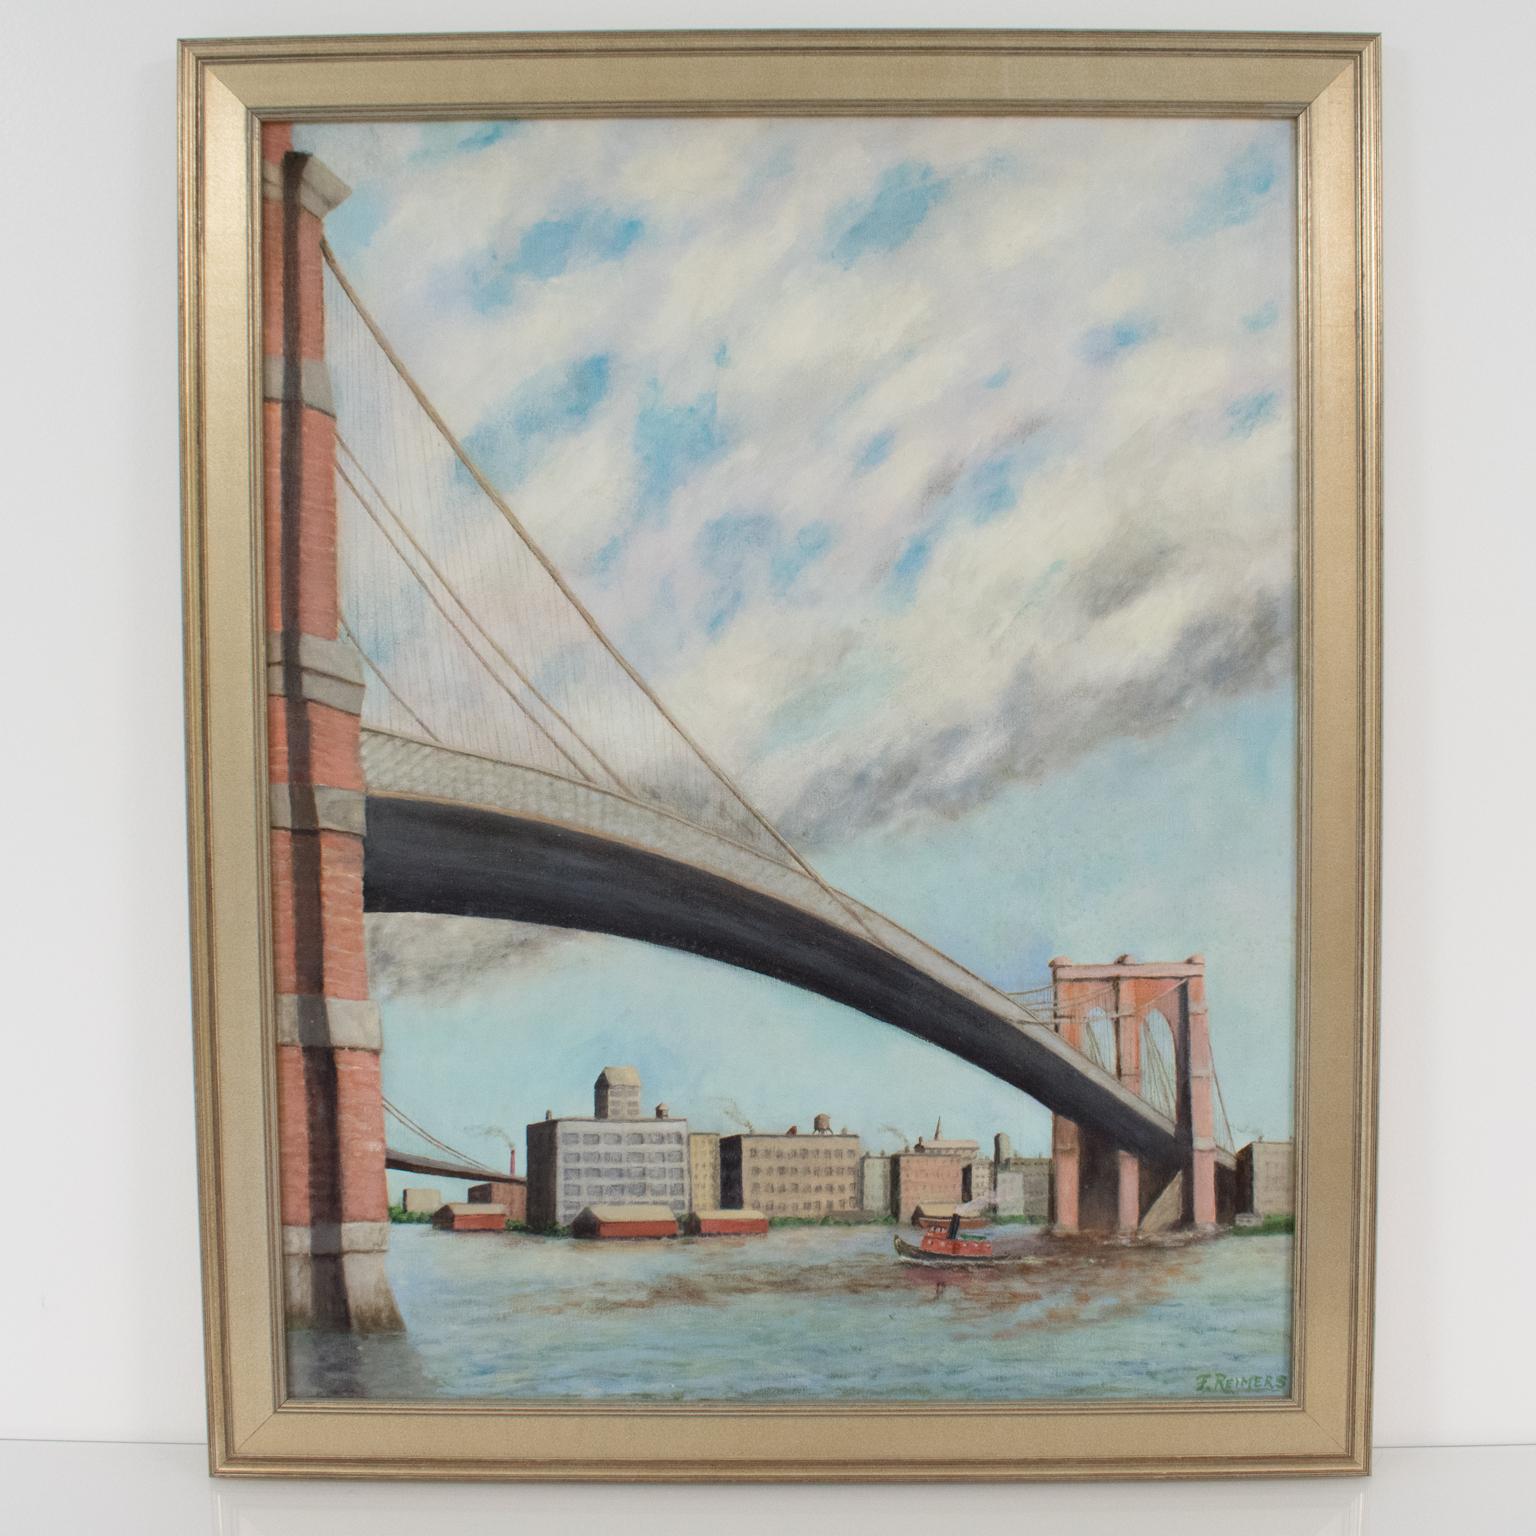 Brooklyn Transfer East River Crossing, Öl auf Leinwand, Gemälde Frederick Reimers (Moderne), Painting, von Frederick E. Reimers